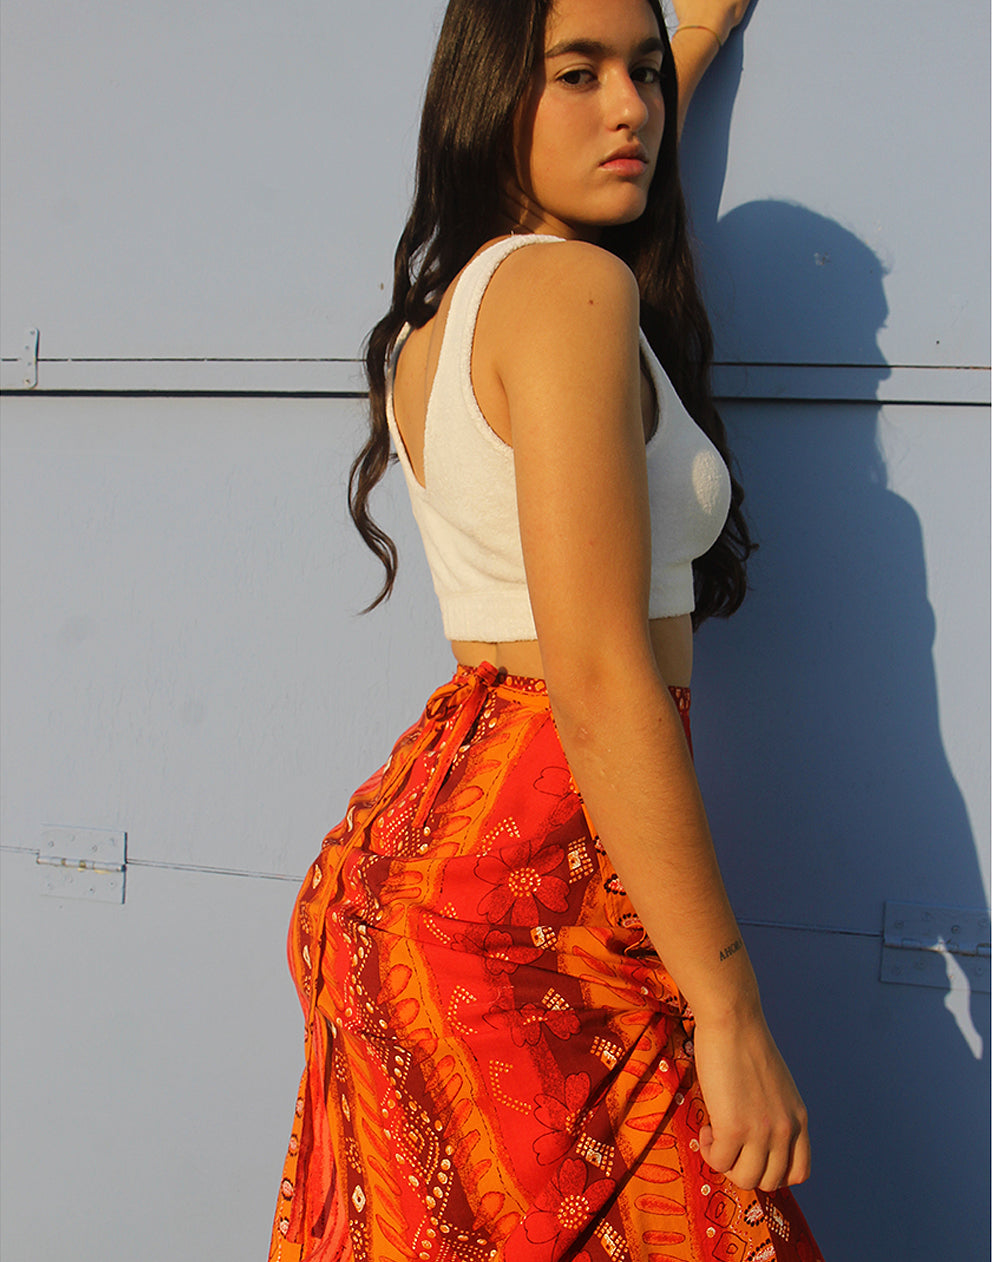 Red & Orange Floral Print Wrap Midi Skirt